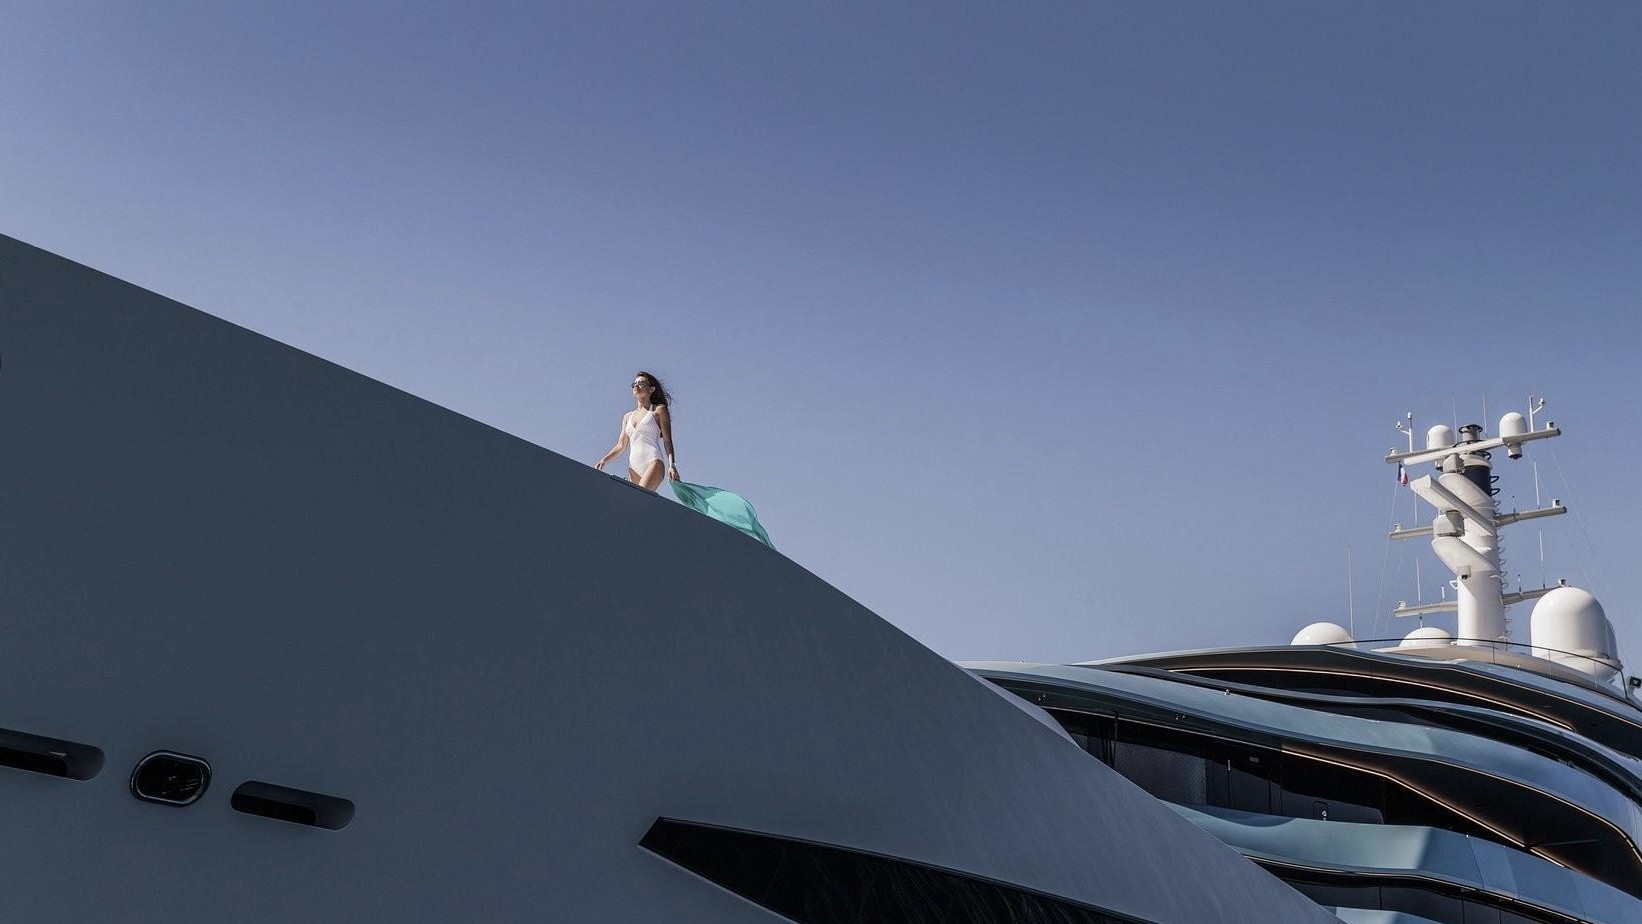 Walmart Heiress's $300 Million Yacht Spotted in Miami 👀🏝️🛳️ #miami , kaos yacht inside